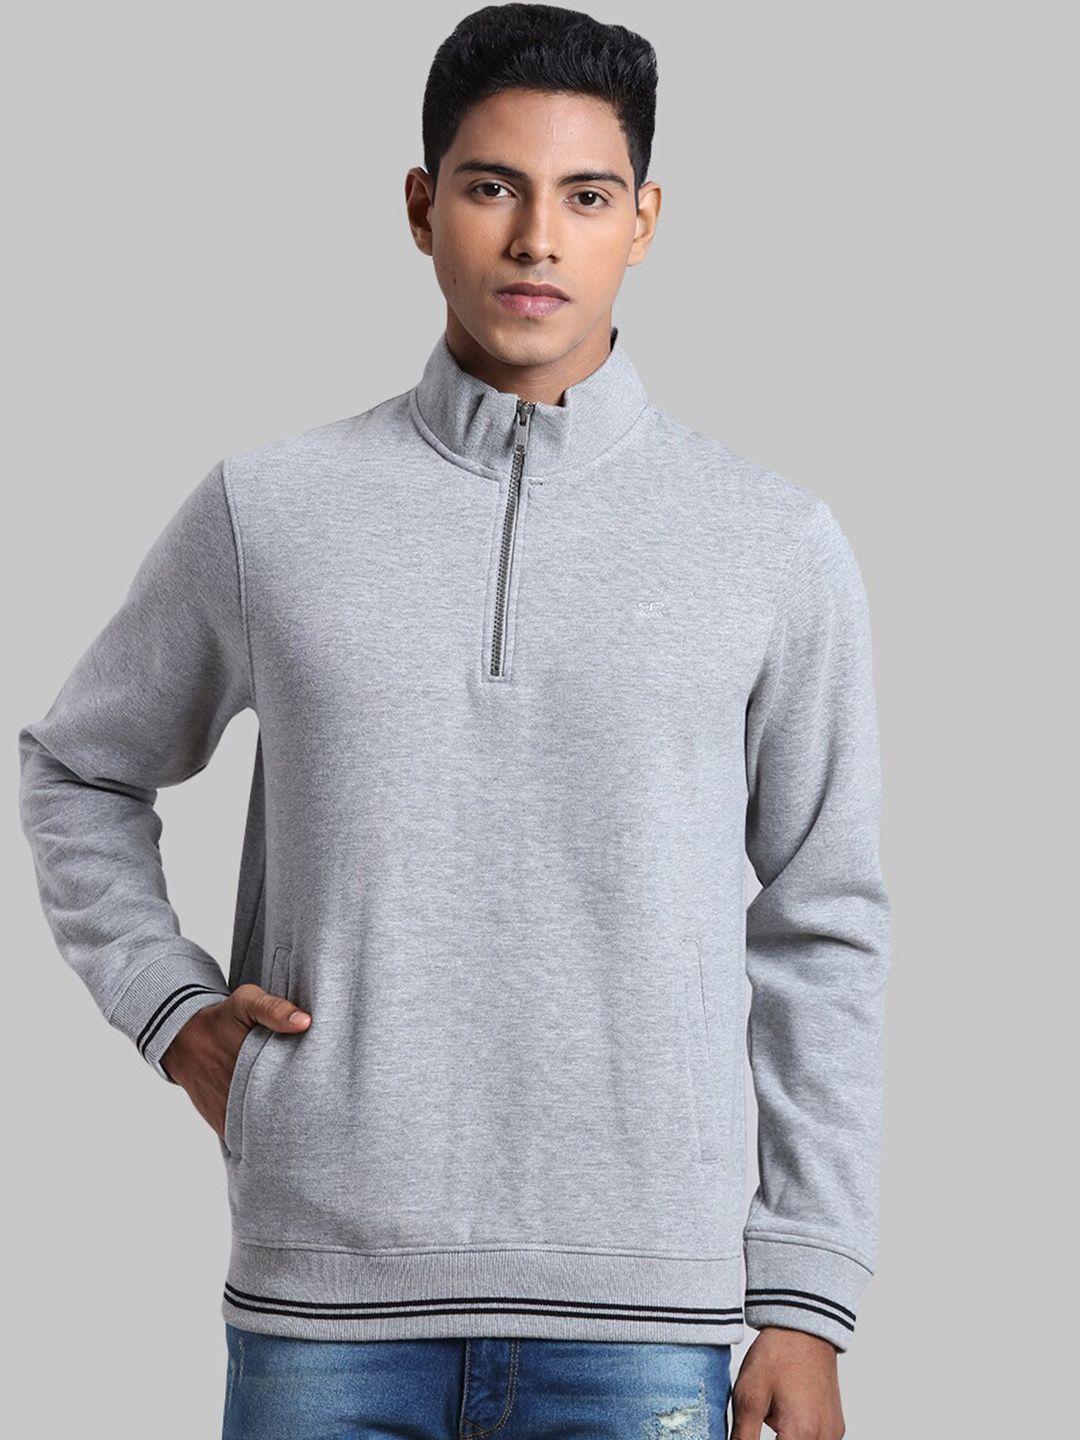 colorplus men grey cotton sweatshirt